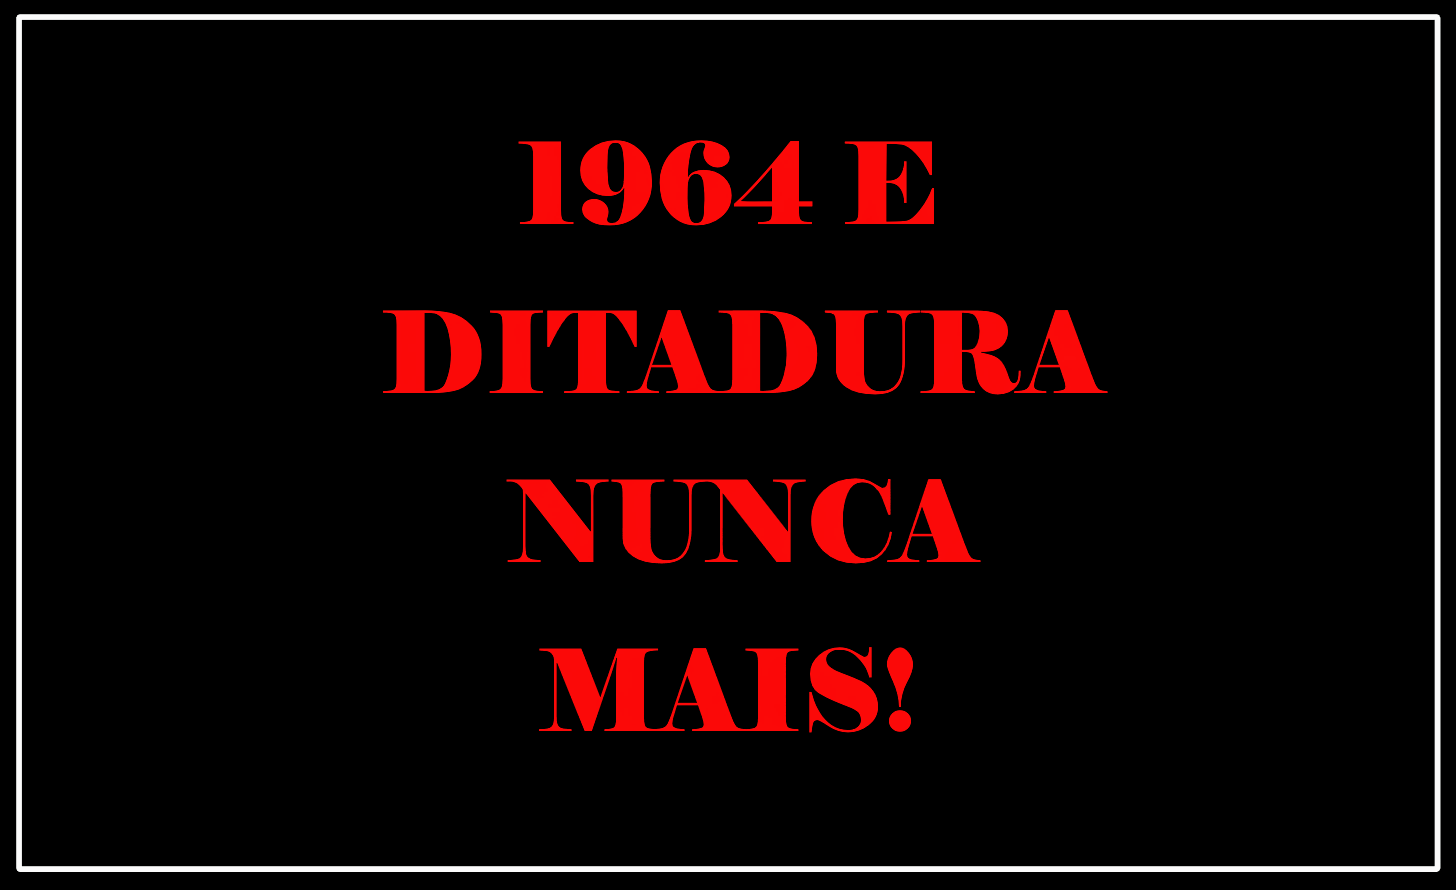  ditadura militar no Brasil.